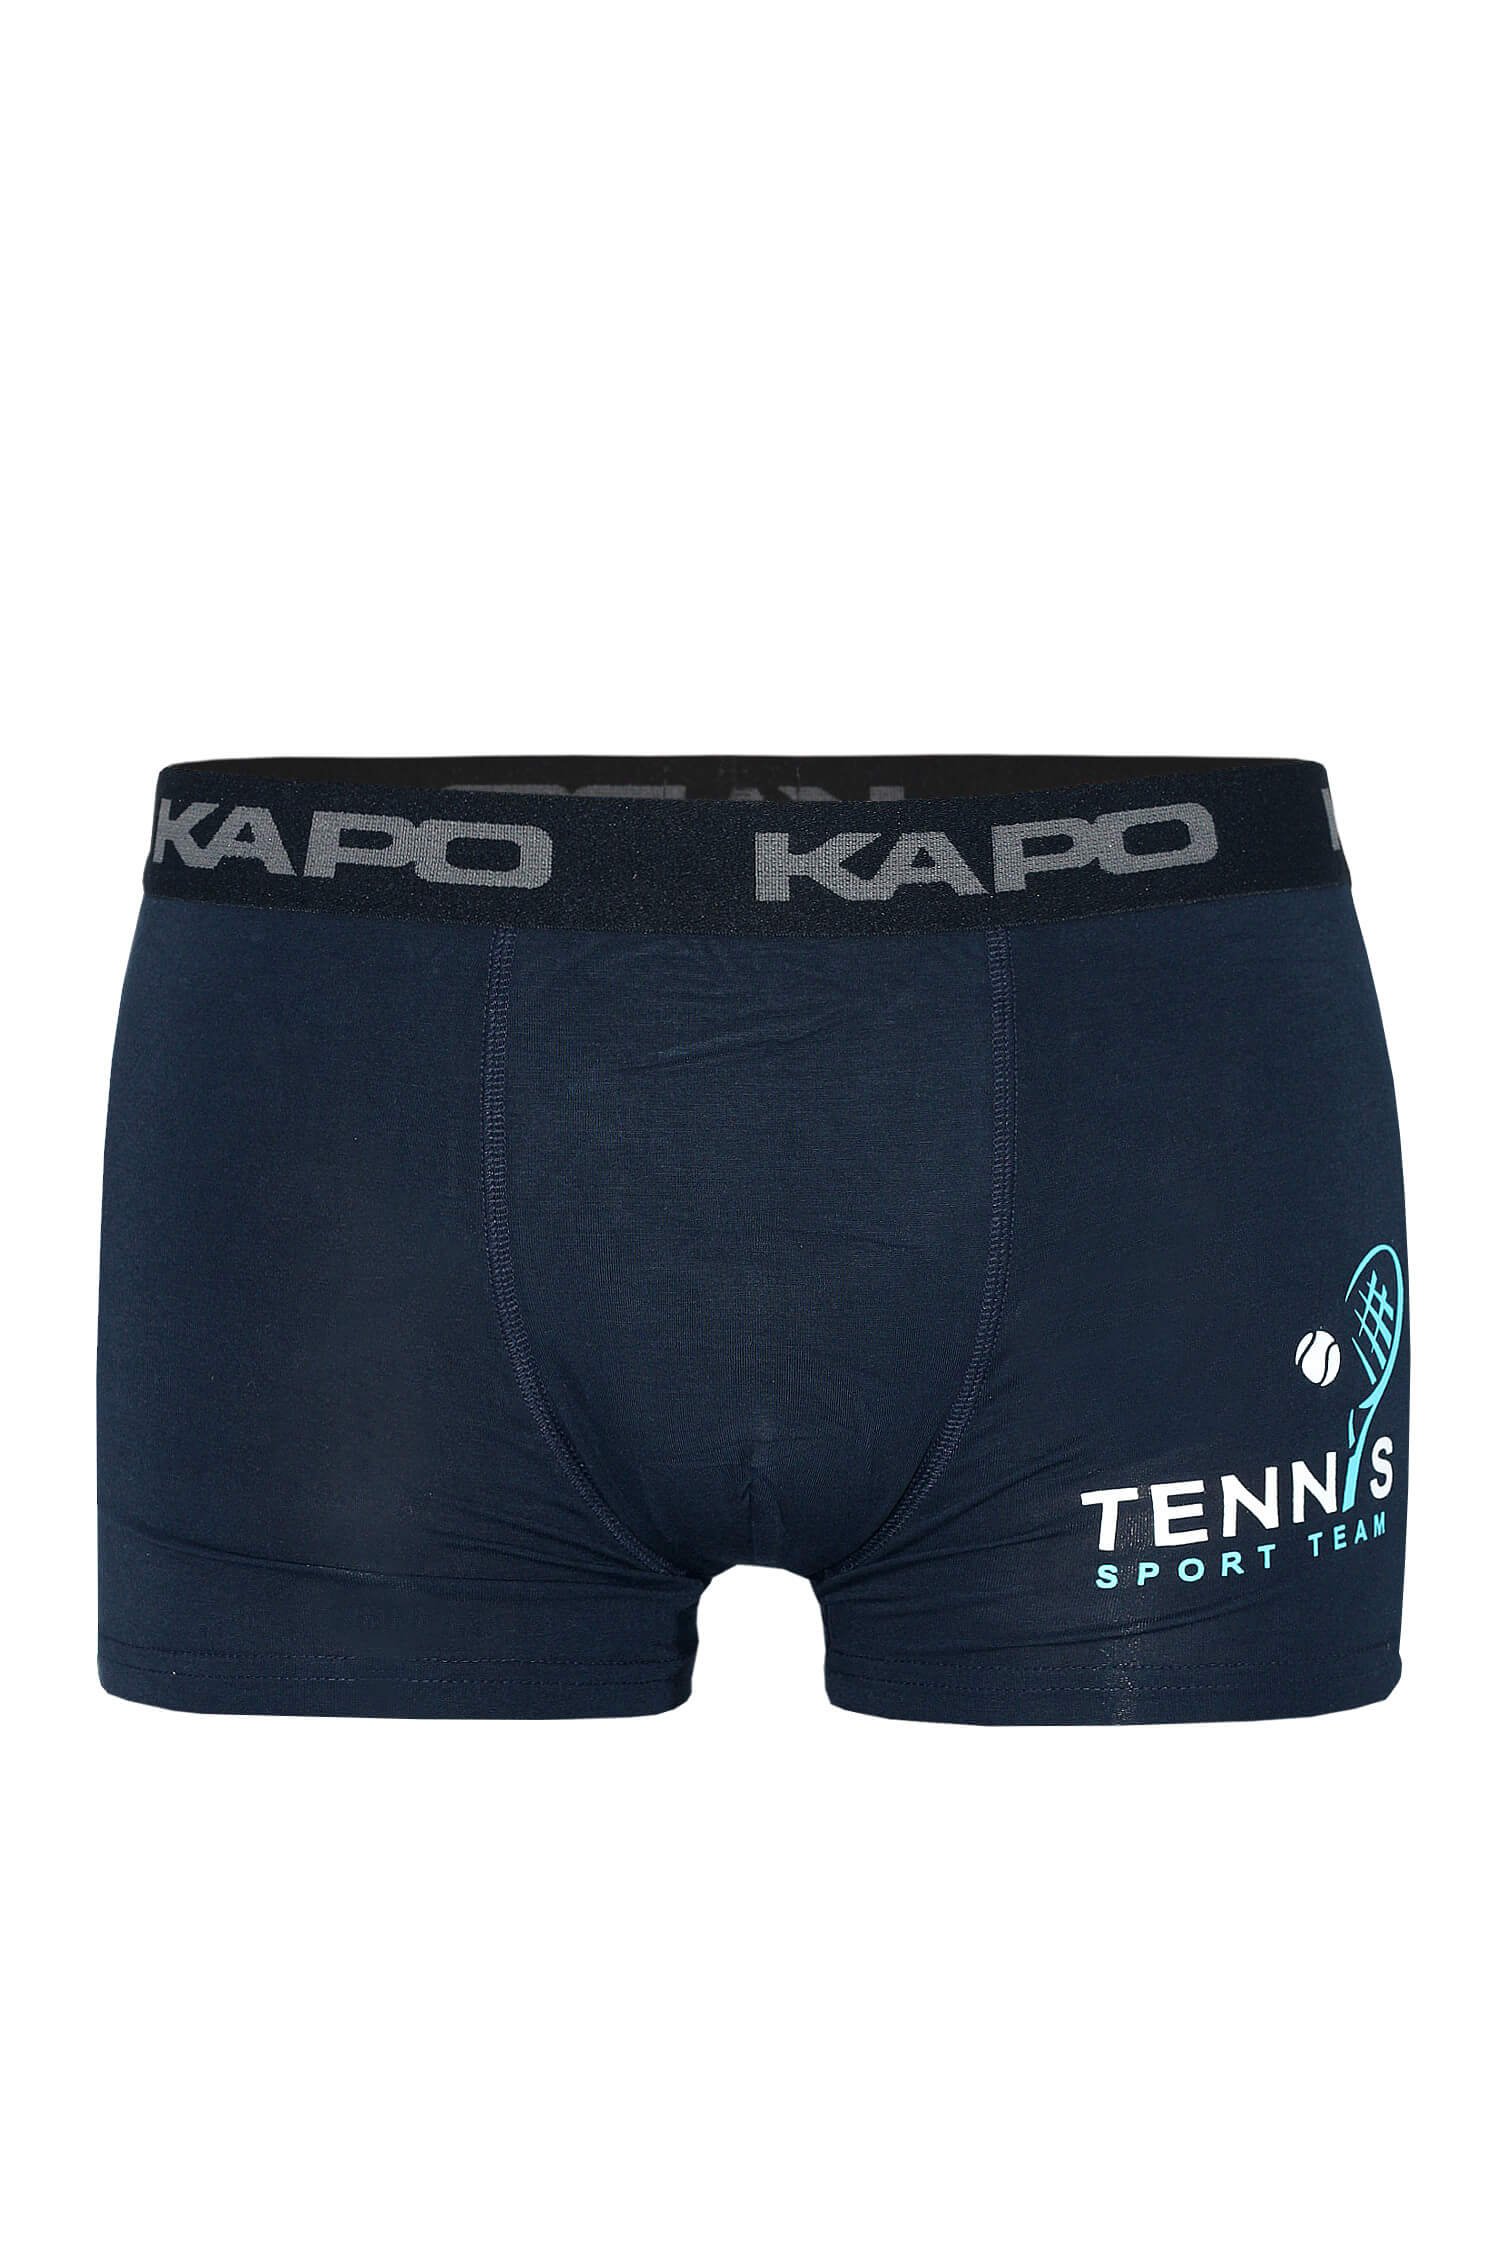 Rafael Kapo tenis boxerky XL tmavě modrá